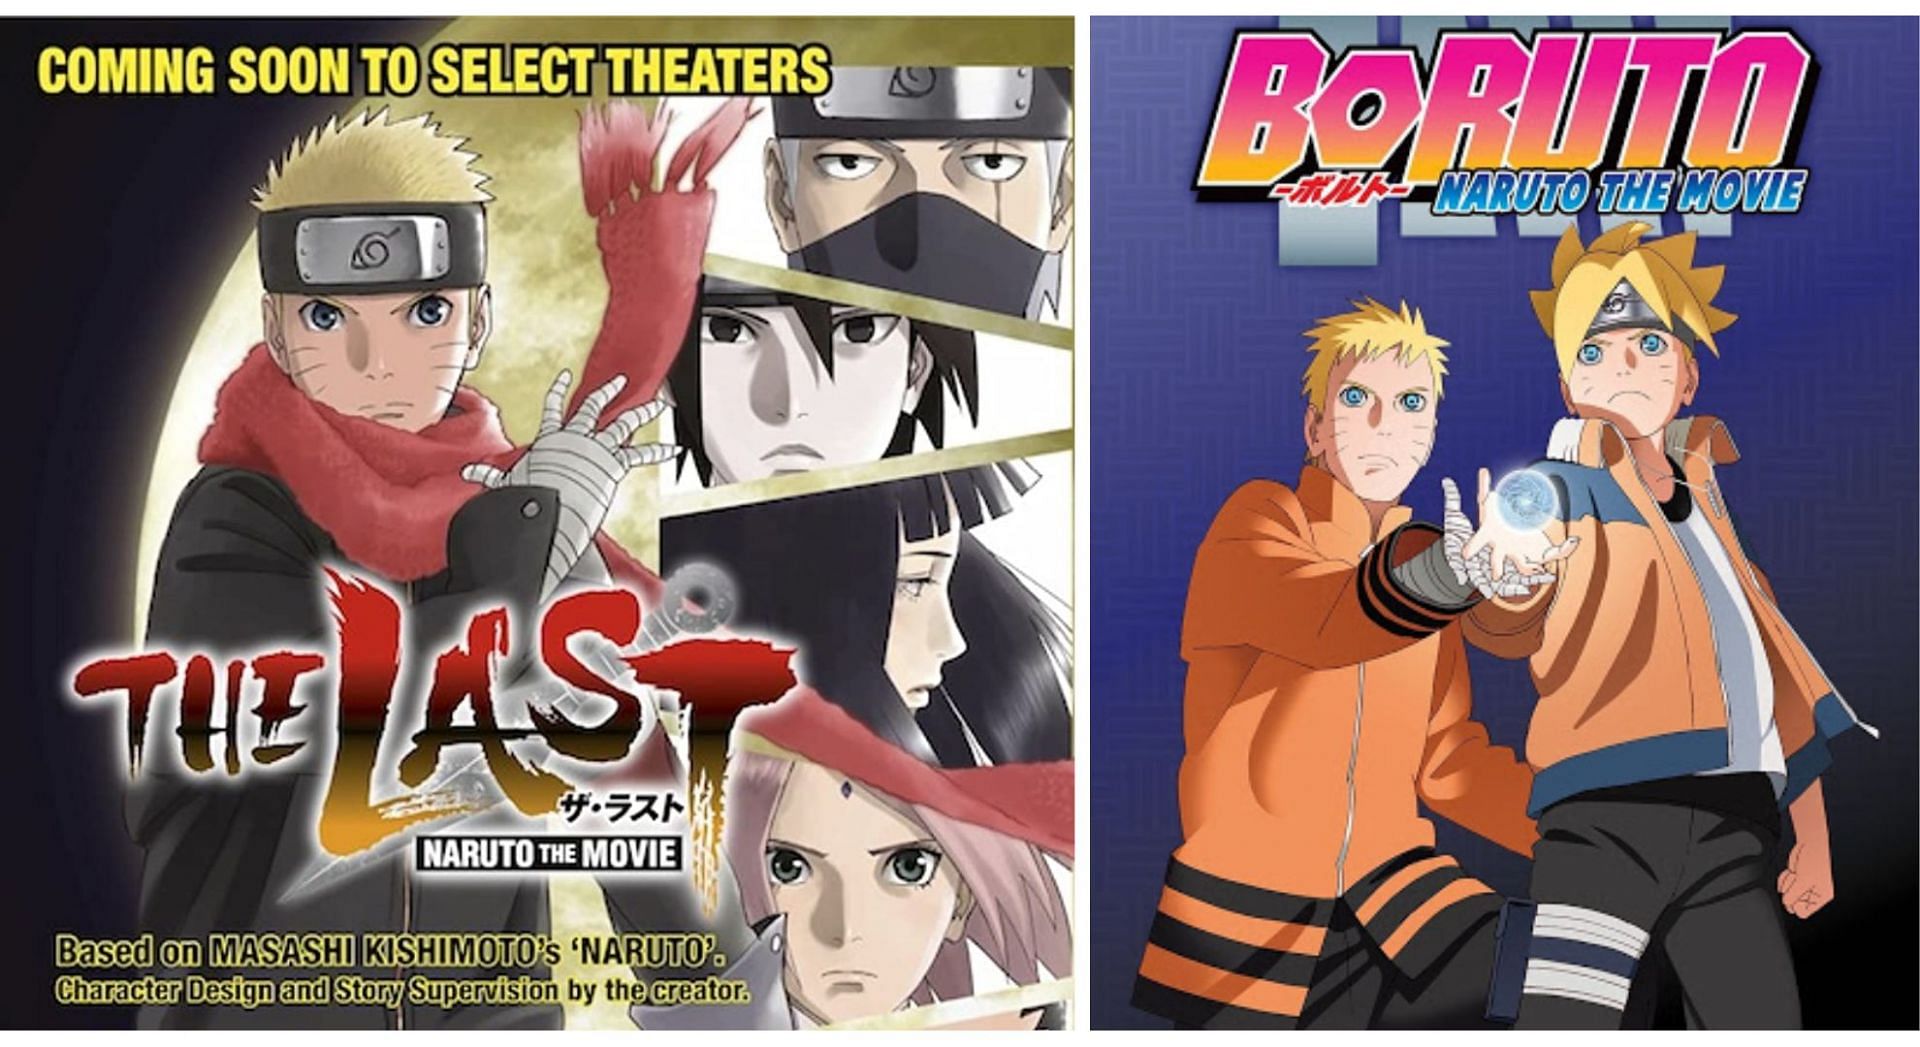 Posters for Naruto: The Last and Boruto: The Movie (Image via Sportskeeda)